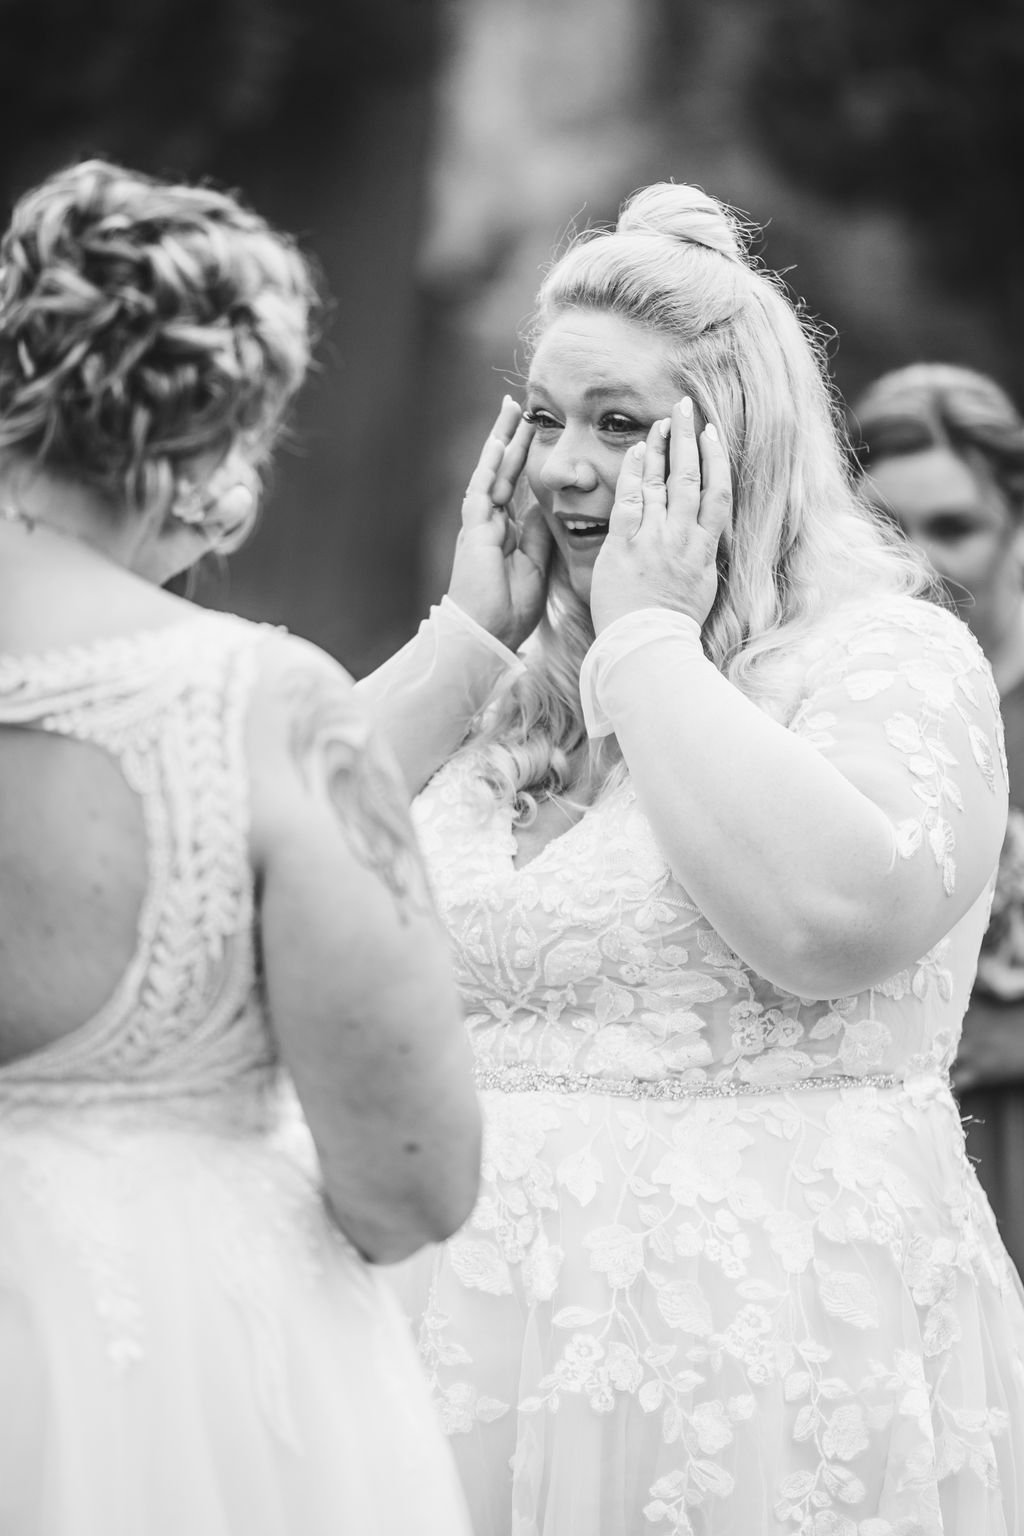 Alex+LaurenWedding-emily tebbetts photography-216 borderland state park queer lesbian LGBTQ intimate wedding elopement boston wedding photographer.jpg